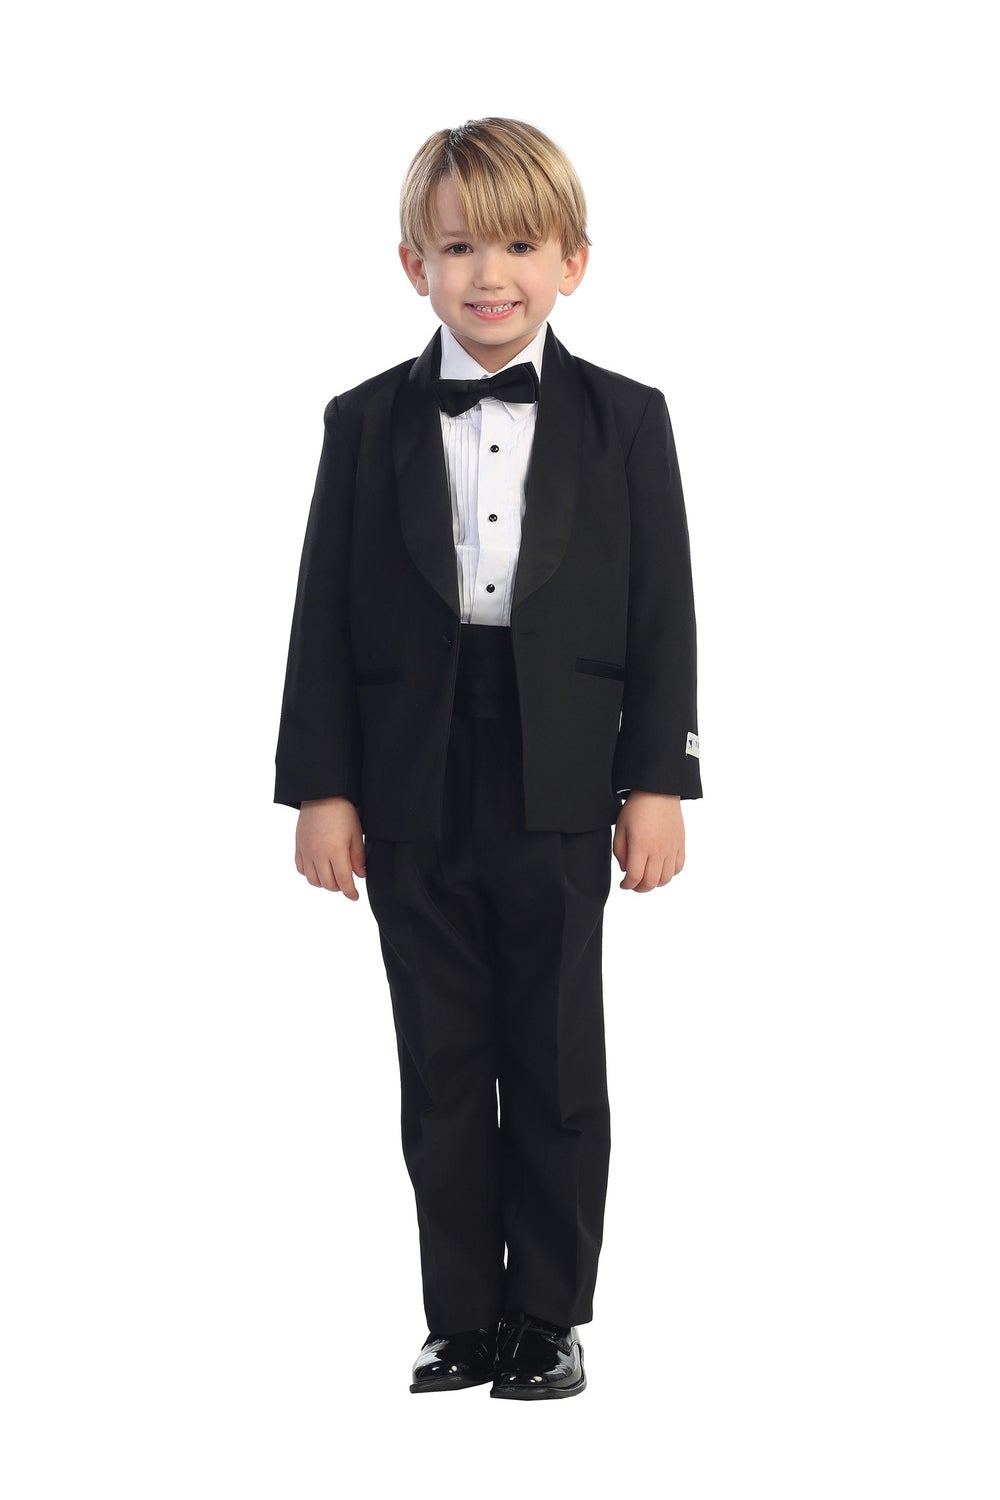 Tip Top "Alexander" Kids Black Shawl Collar Tuxedo 5-Piece Set